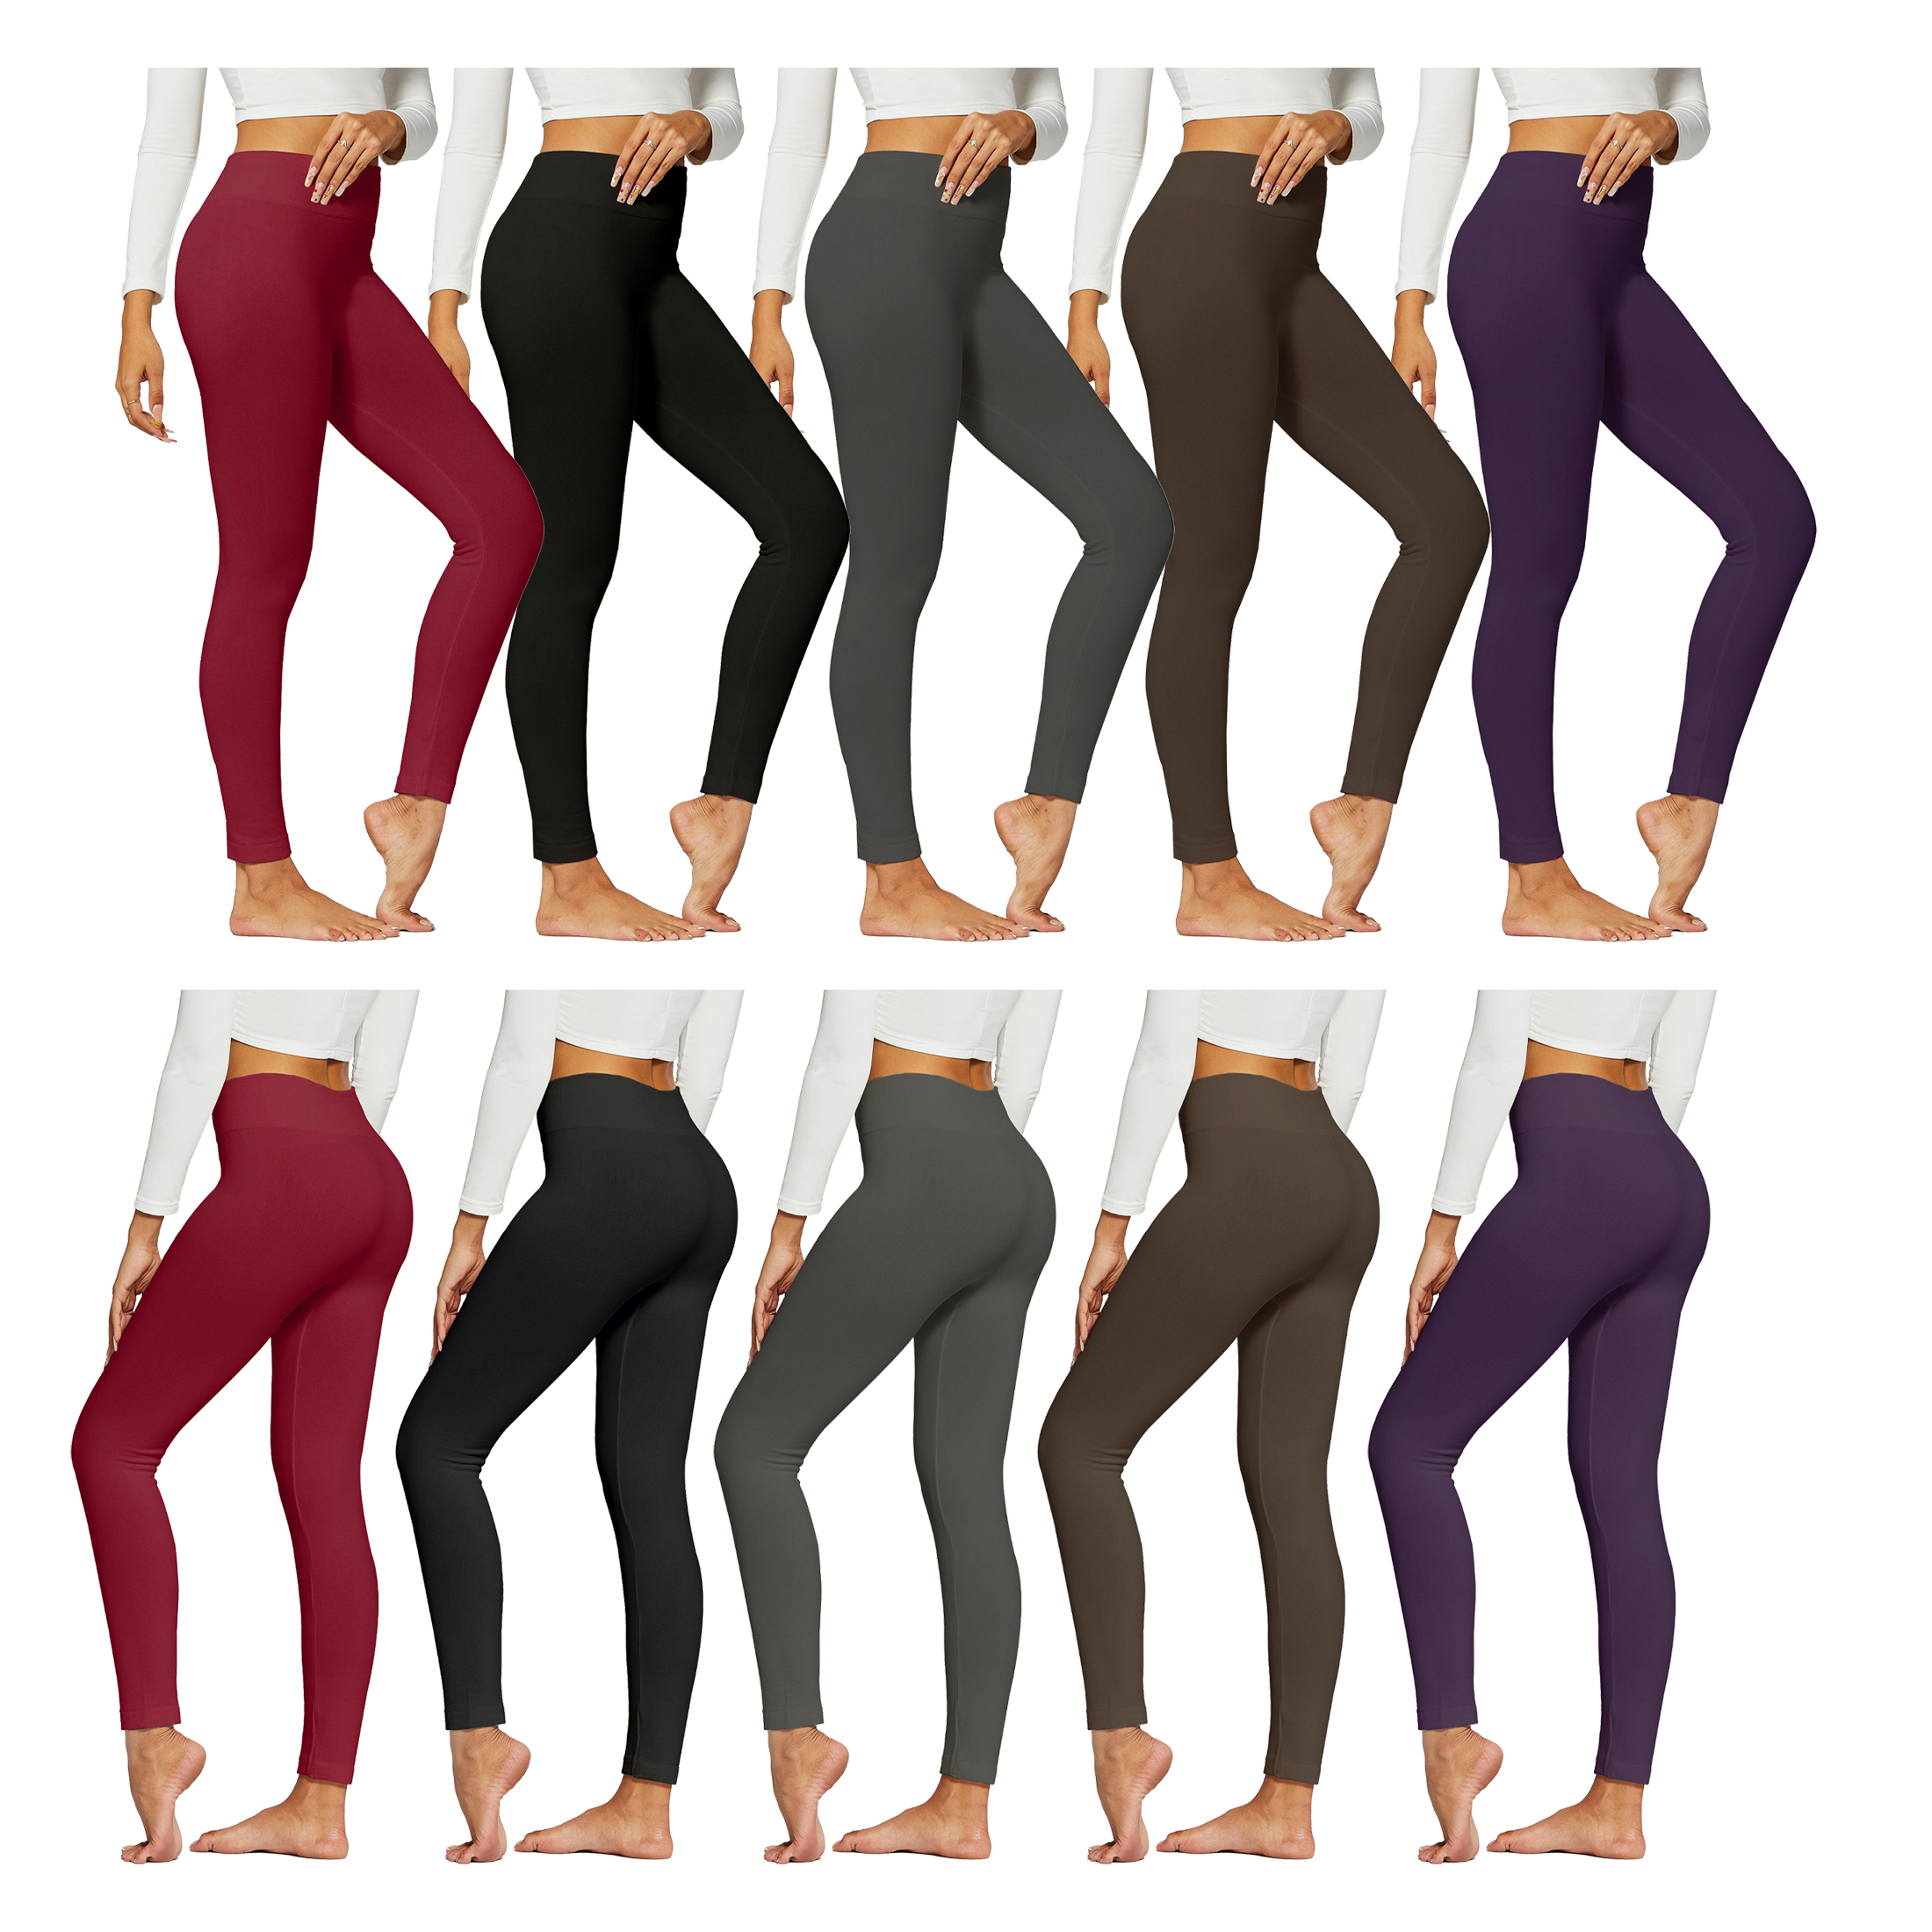 3-Pack:Women's Premium Quality High-Waist Fleece-Lined Leggings (Plus Size Available) - Black, Grey & Brown, 1X/2X